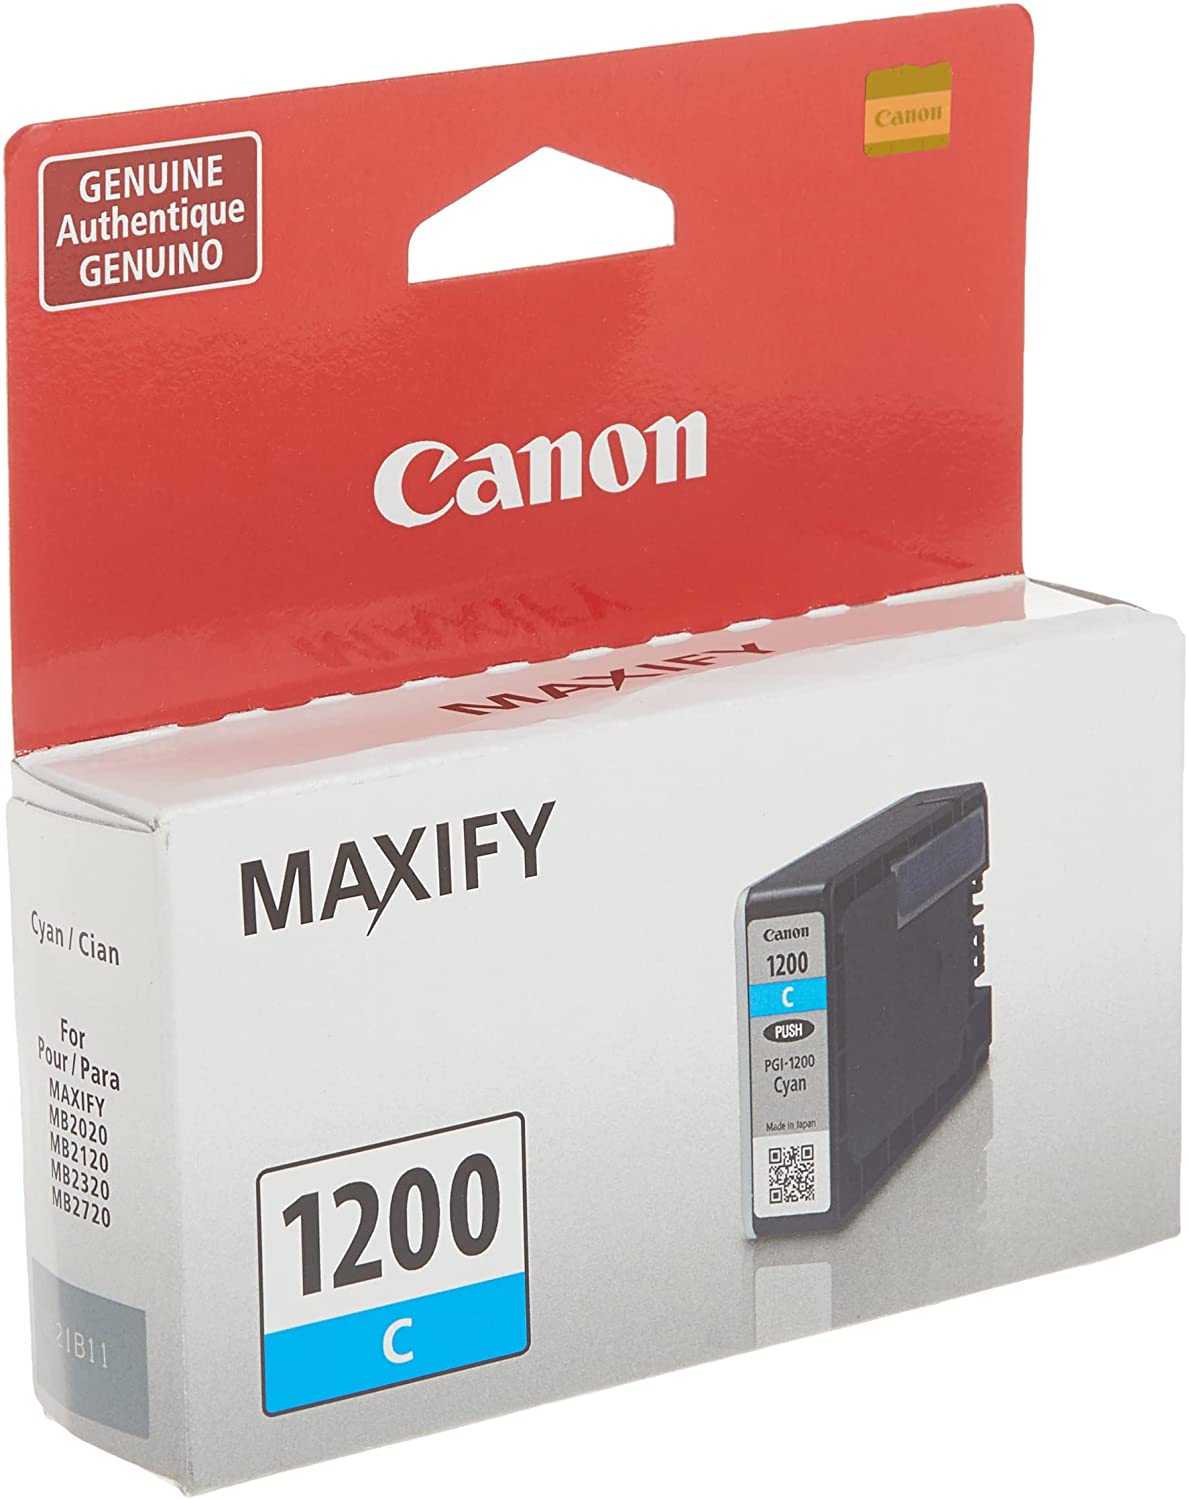 Canon PGI-1200 CYAN Compatible to iB4120,MB2120,MB2720,MB5120,MB5420 Printers